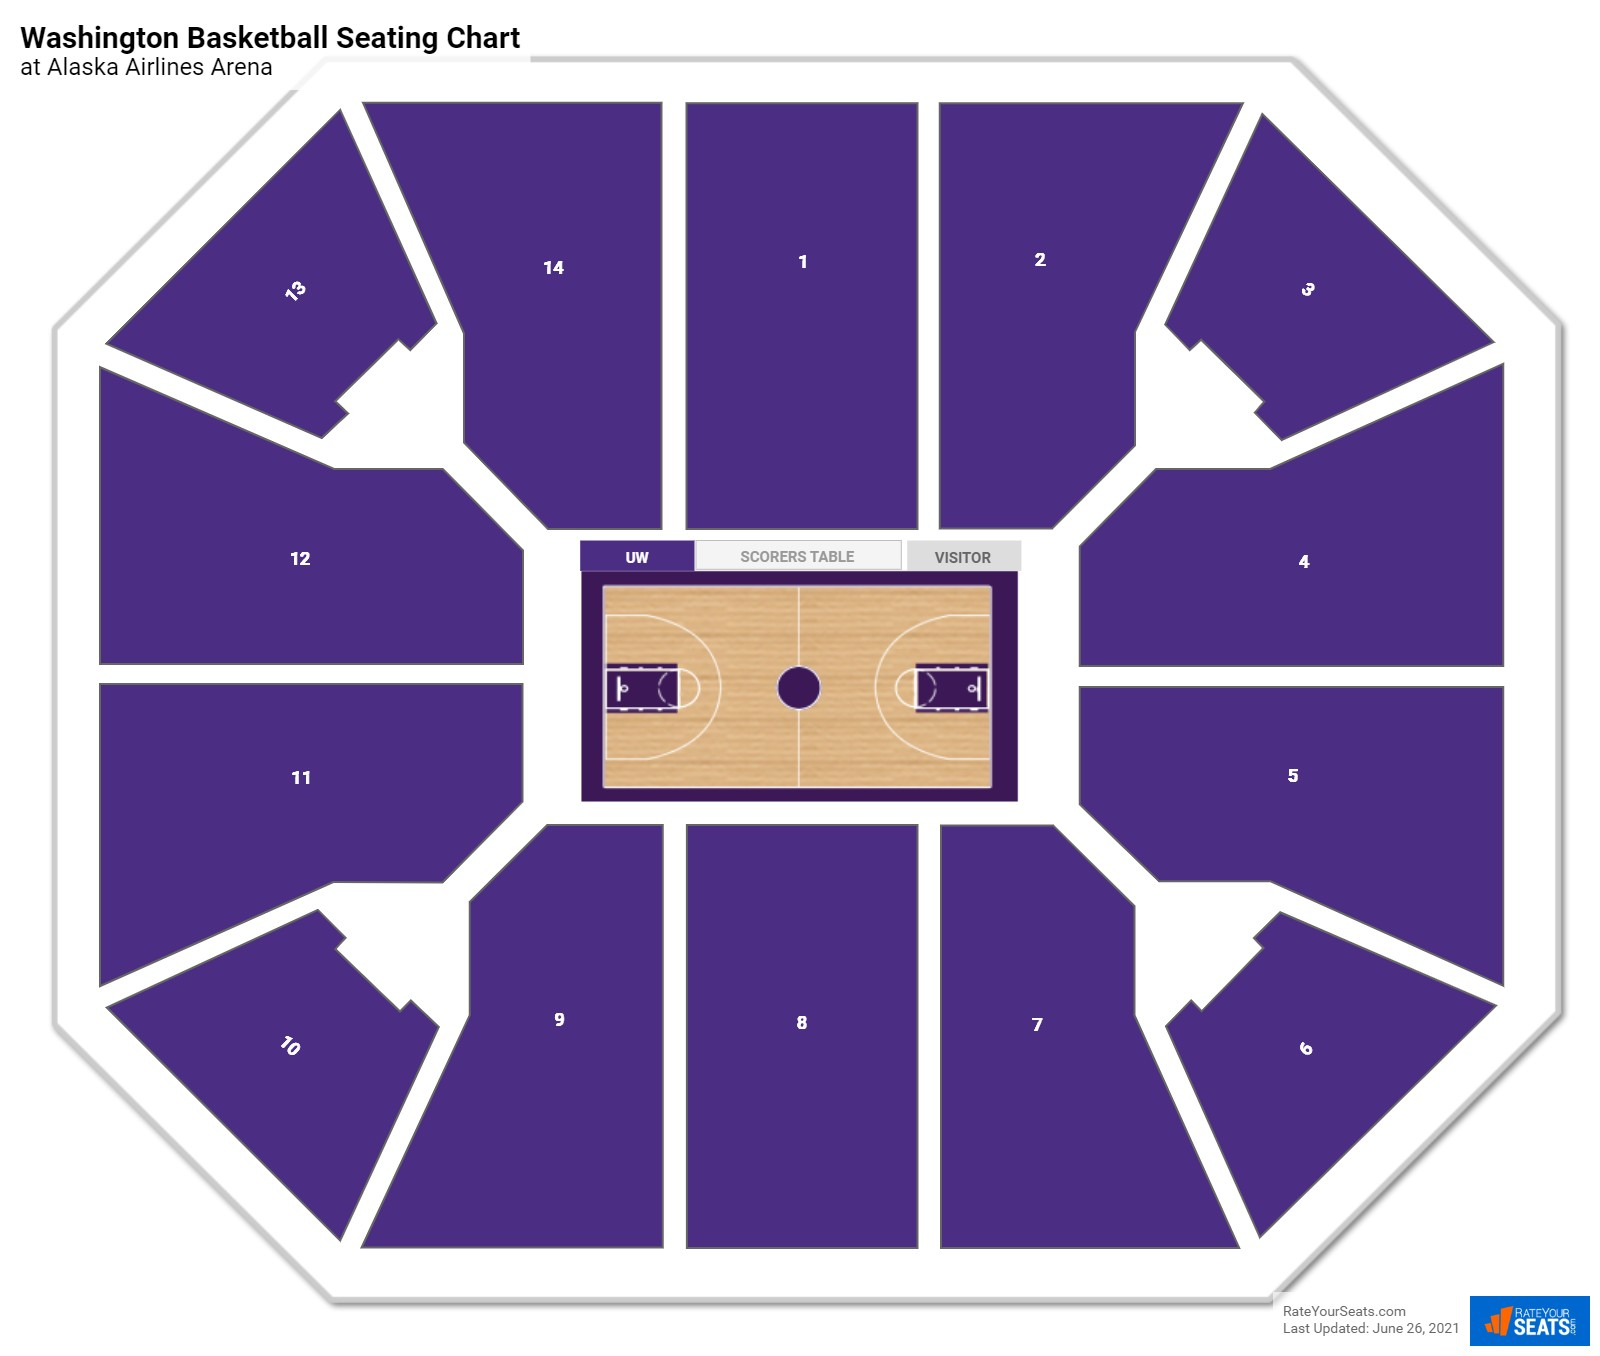 Alaska Airlines Arena Seating Chart RateYourSeats